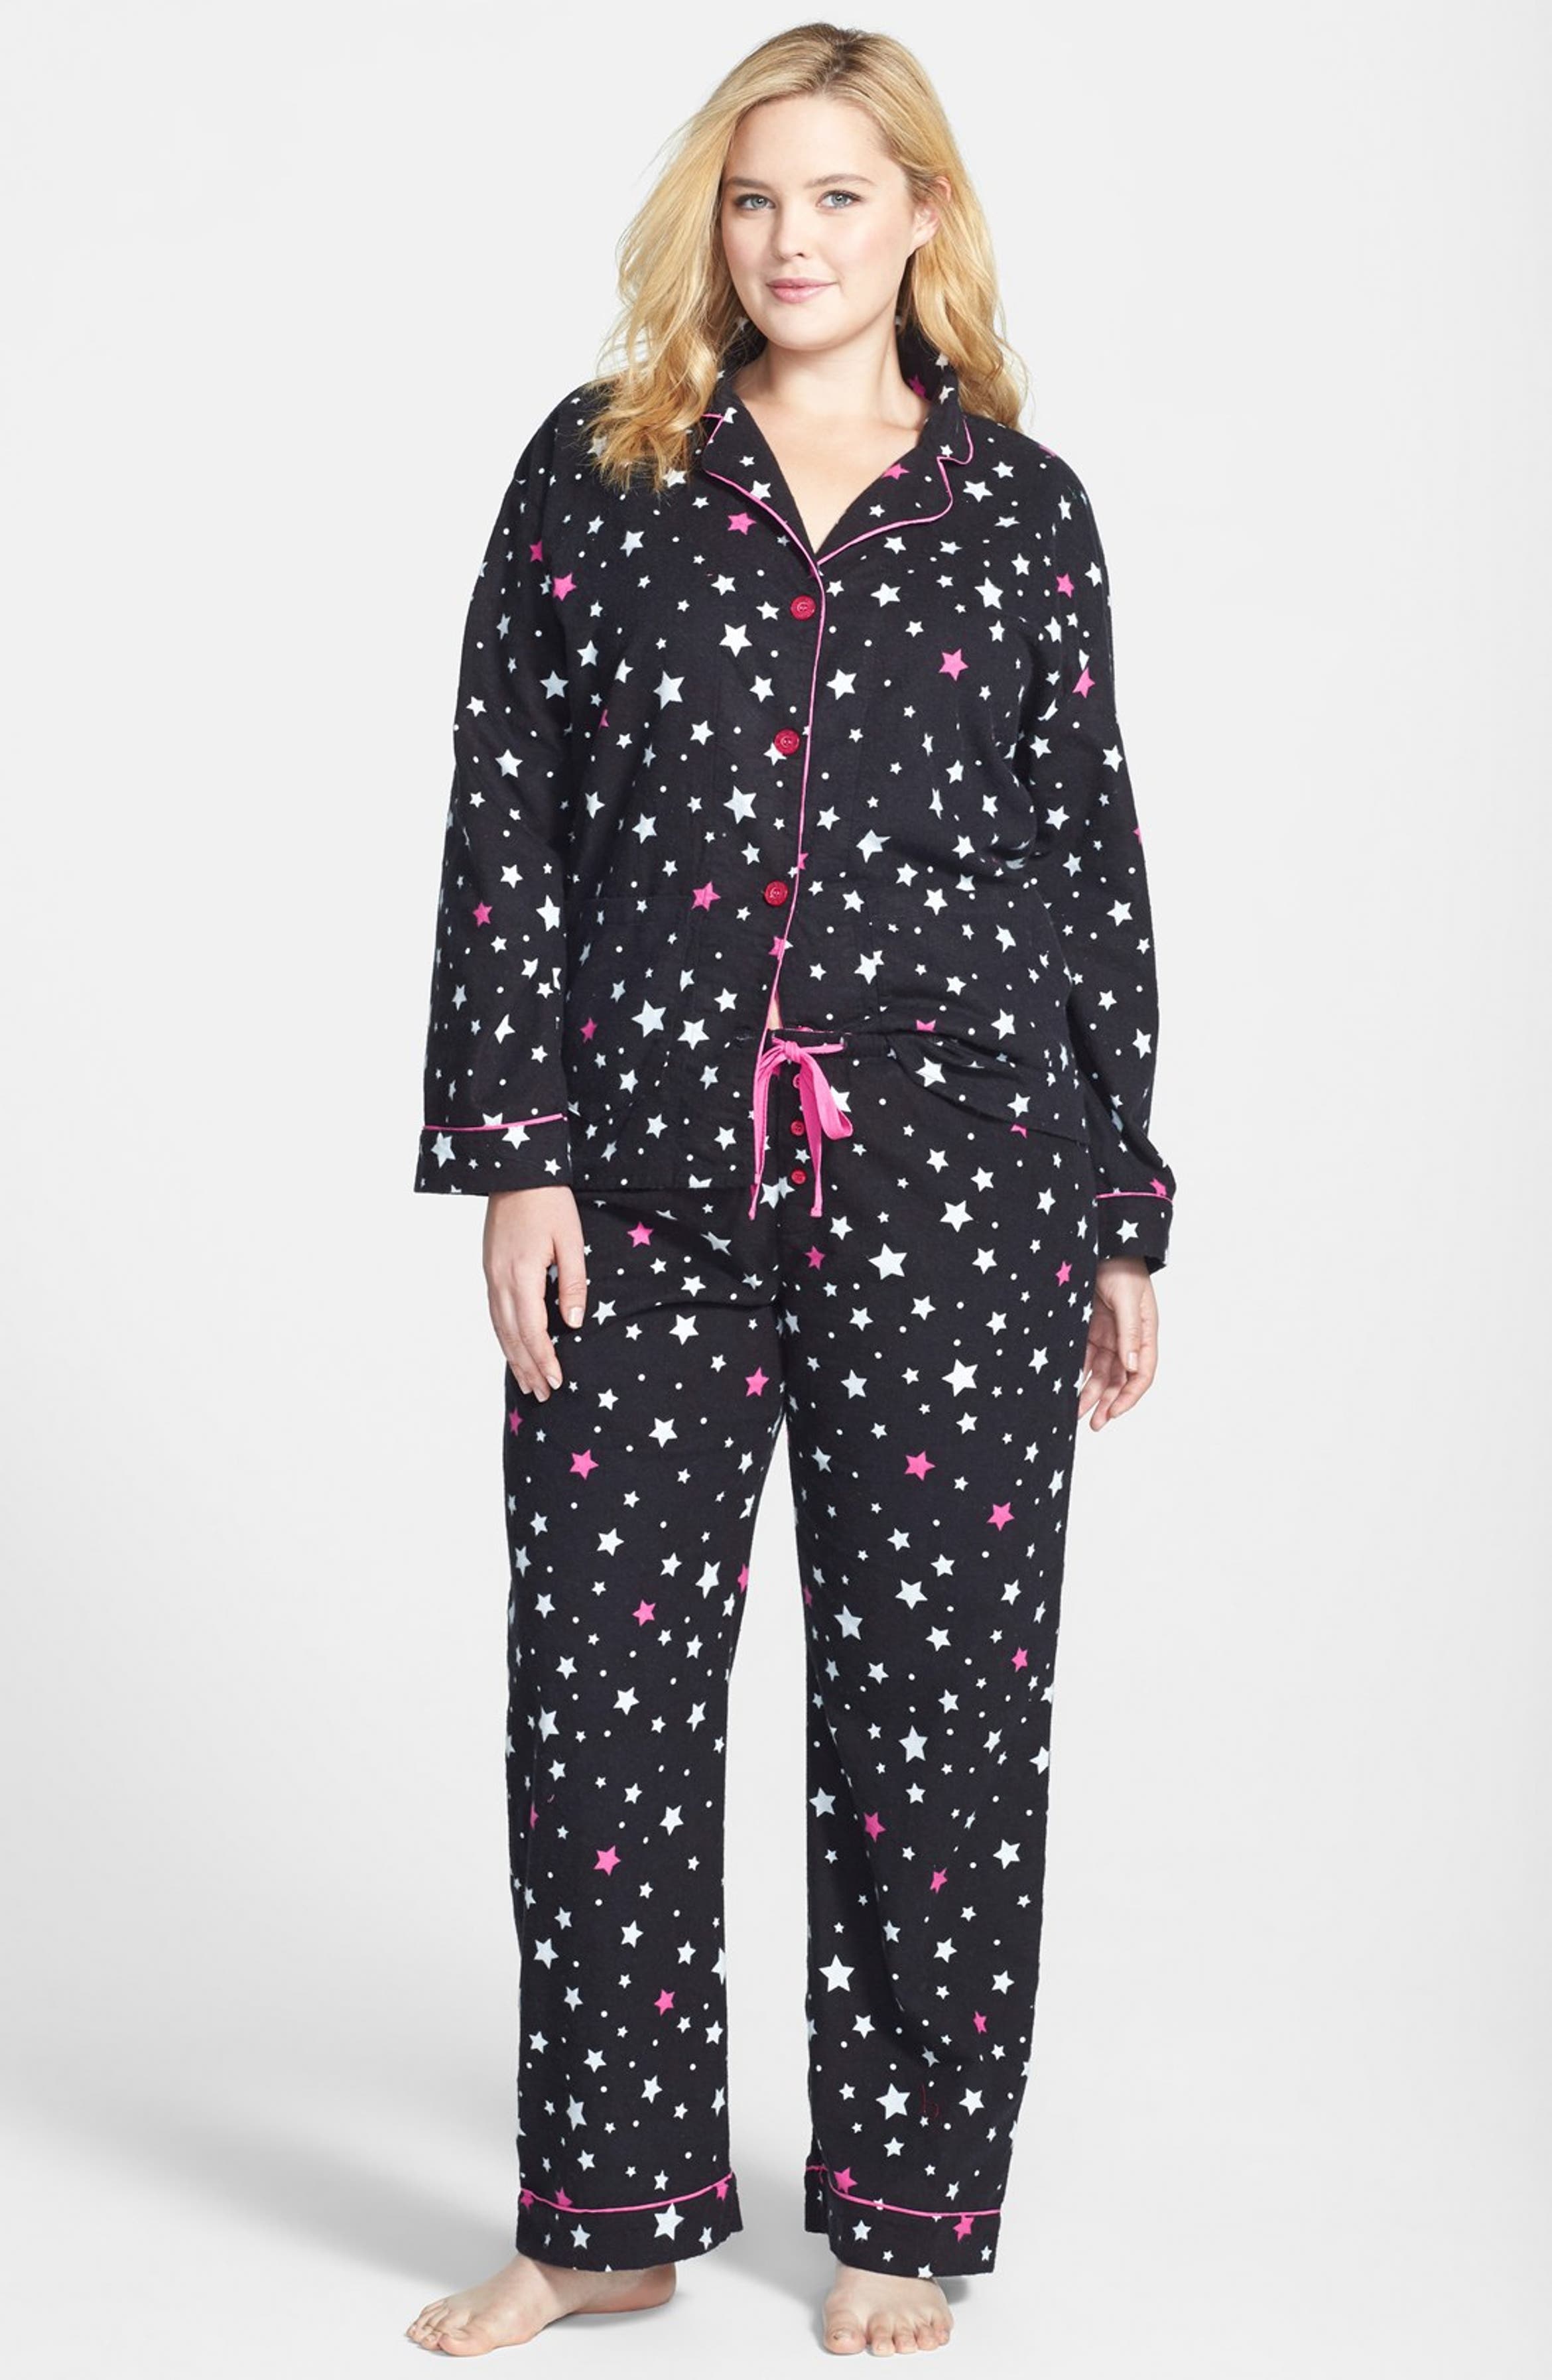 Pj Salvage Fall Into Flannel Pajamas Plus Size Nordstrom